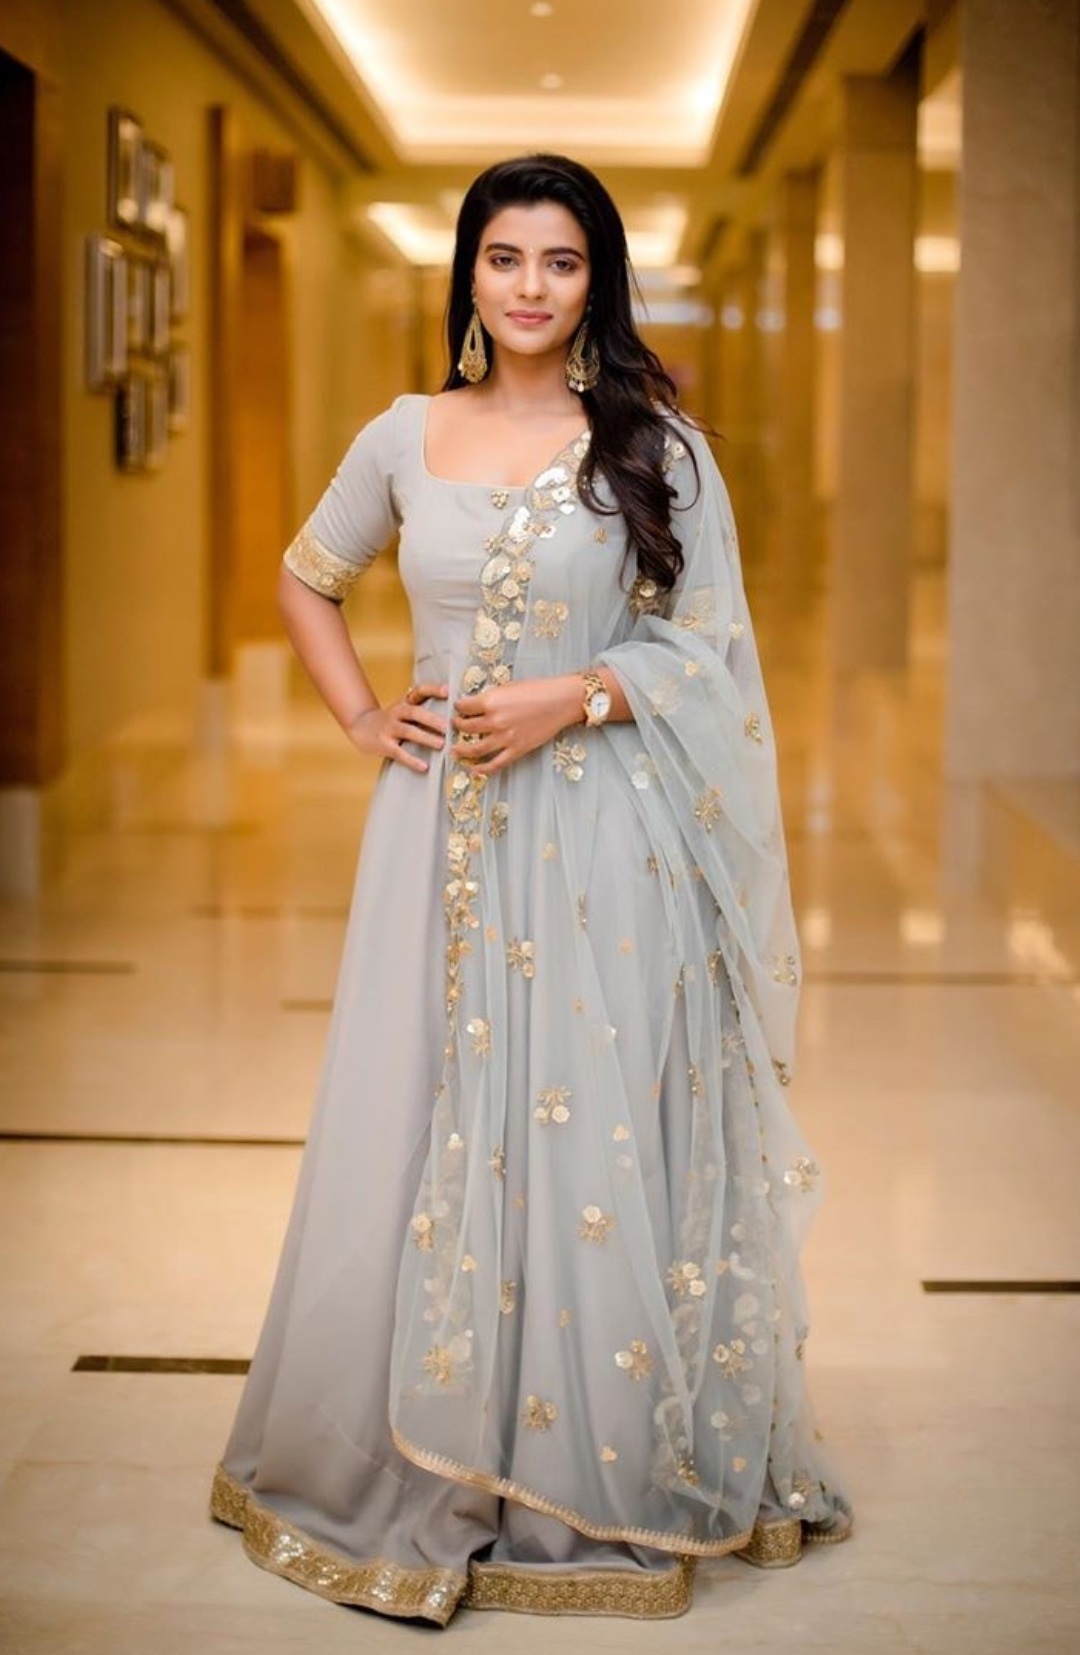 Aishwarya Rajesh Looking So Pretty In a Traditional Dress At Press Meet